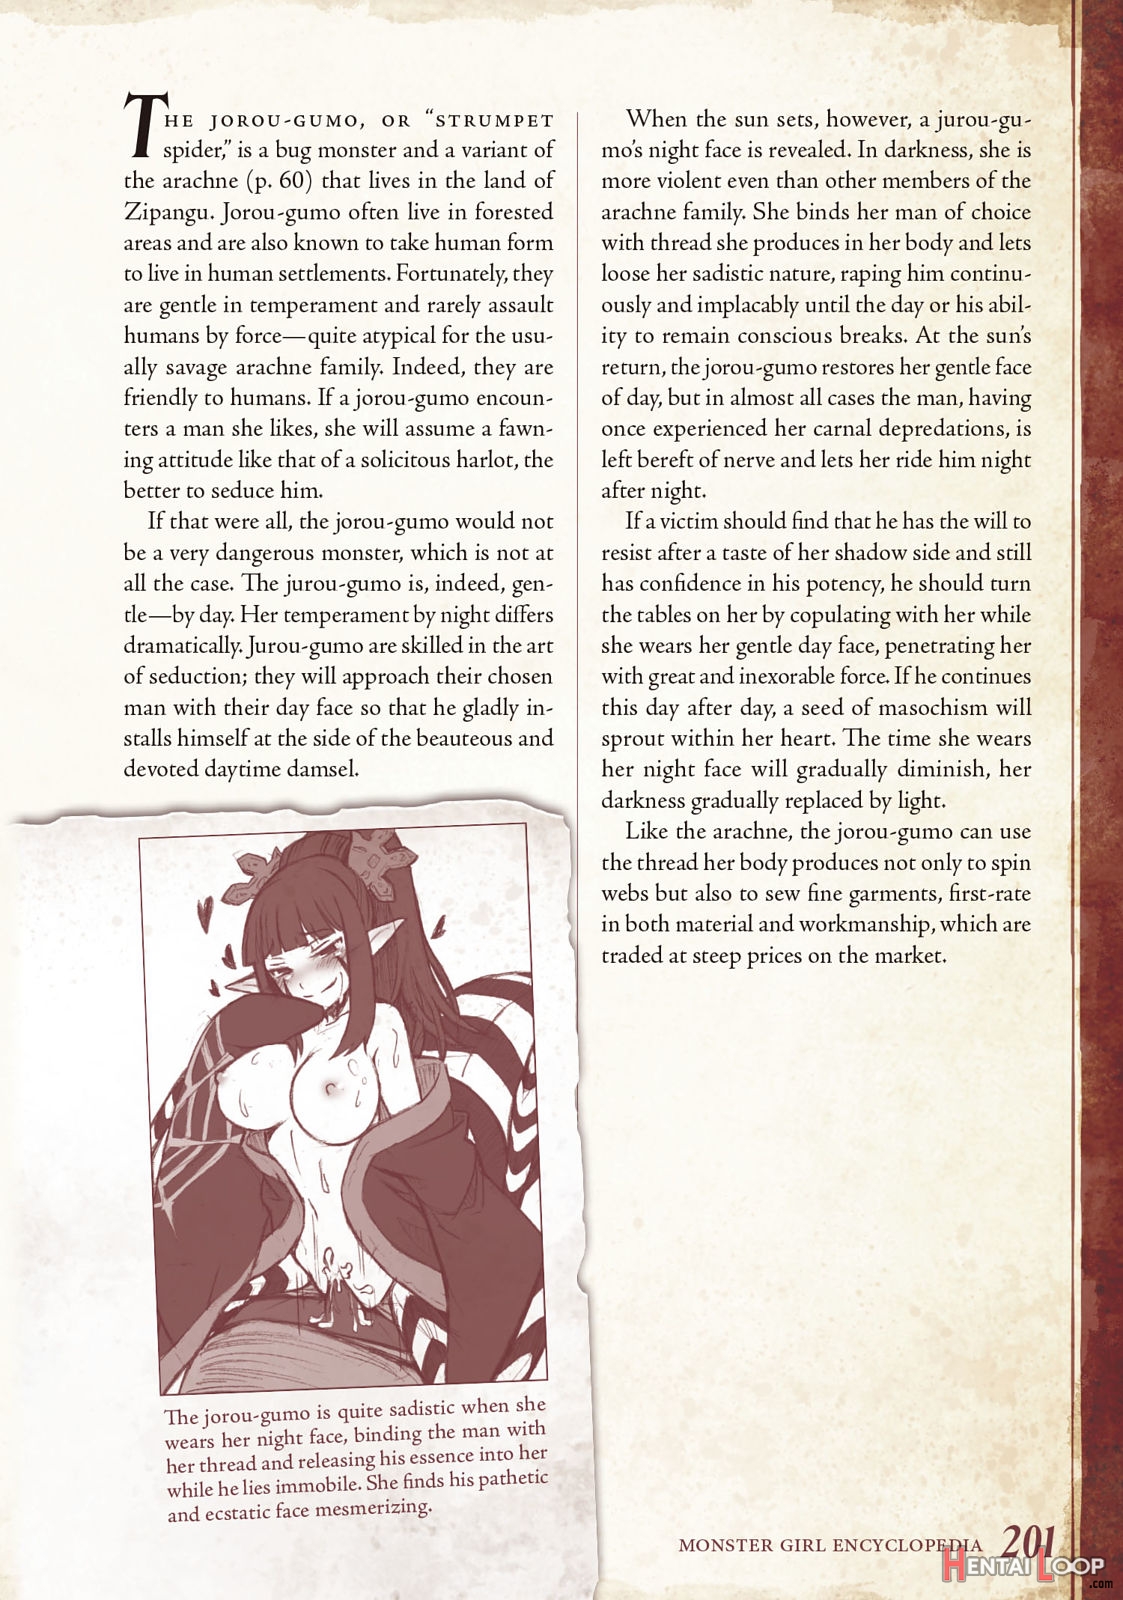 Monster Girl Encyclopedia Vol. 1 page 202